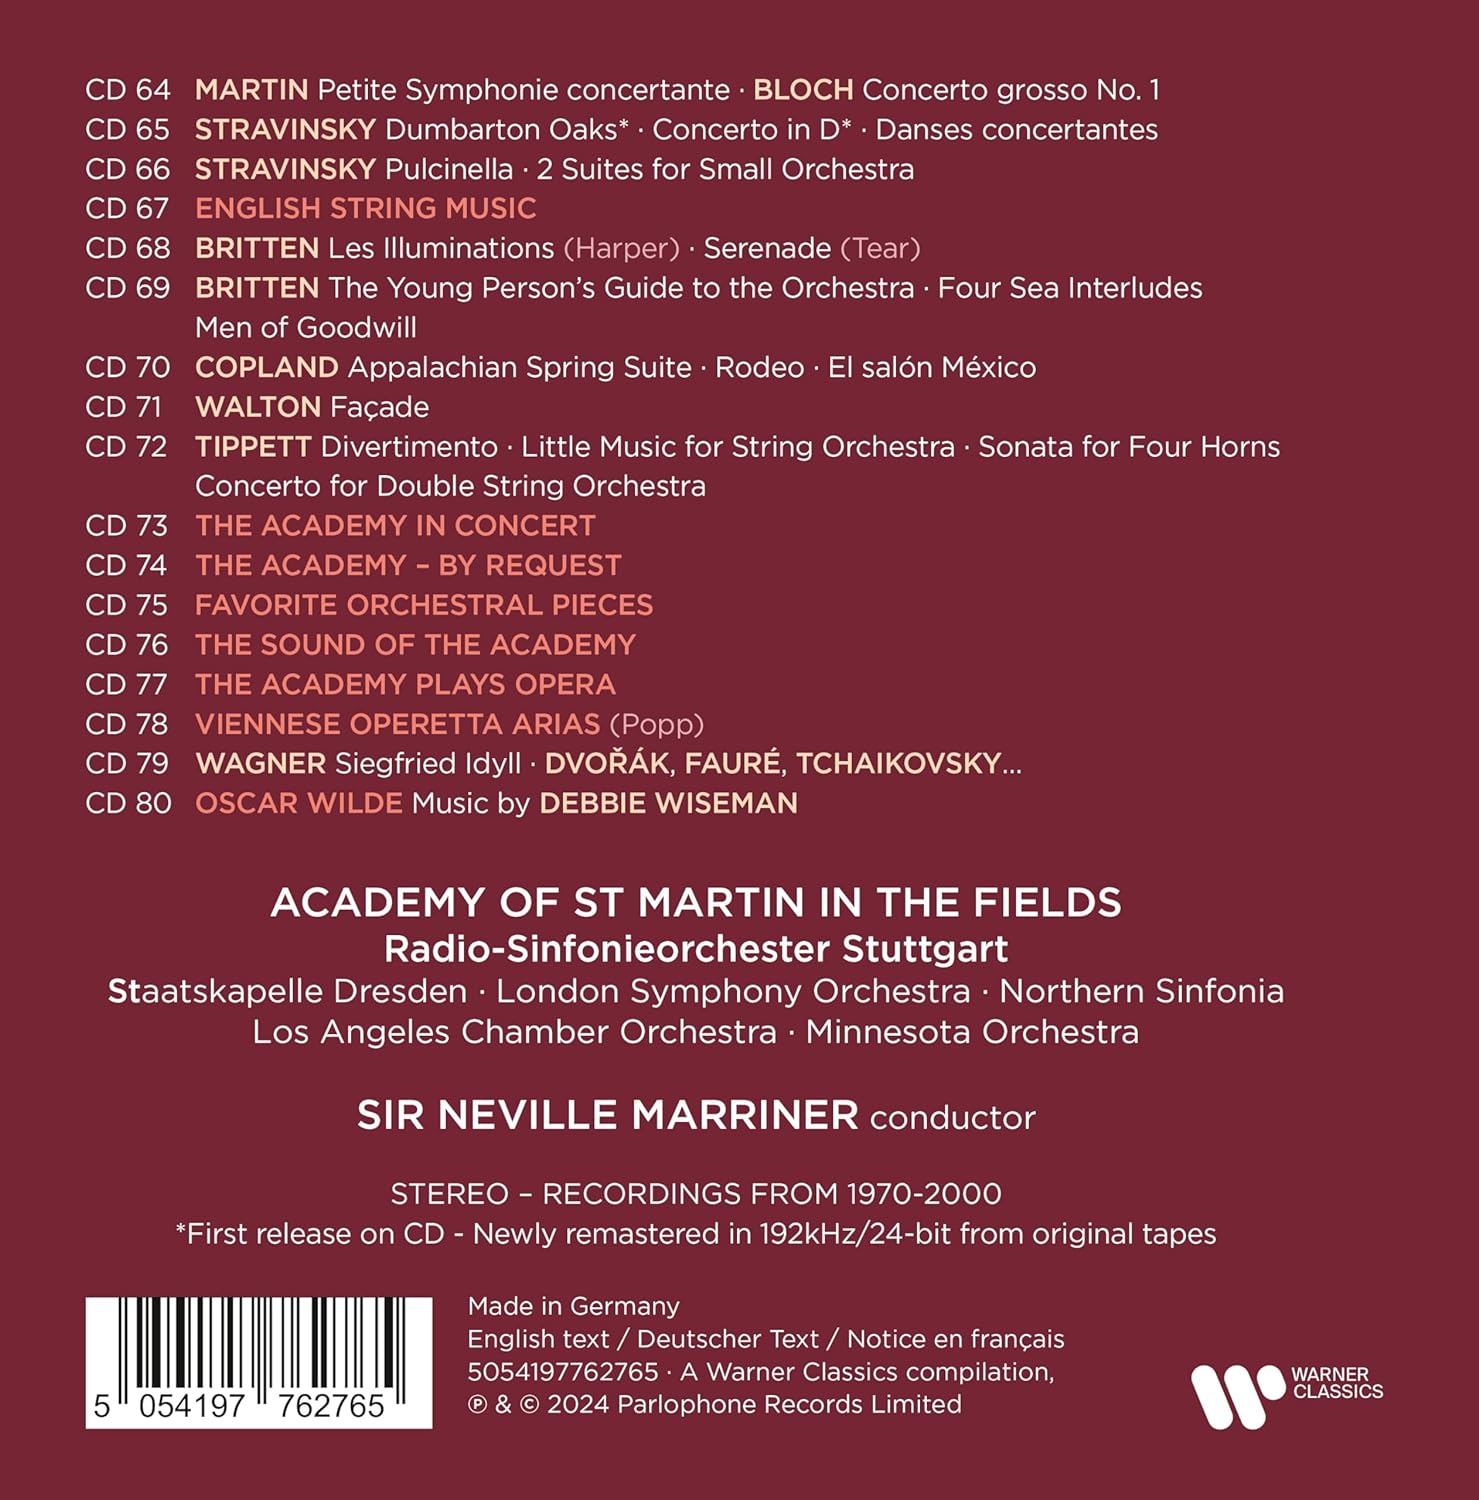 Neville Marriner 네빌 마리너 워너, EMI 레이블 녹음 전집 (The Complete Warner Classics Recordings)